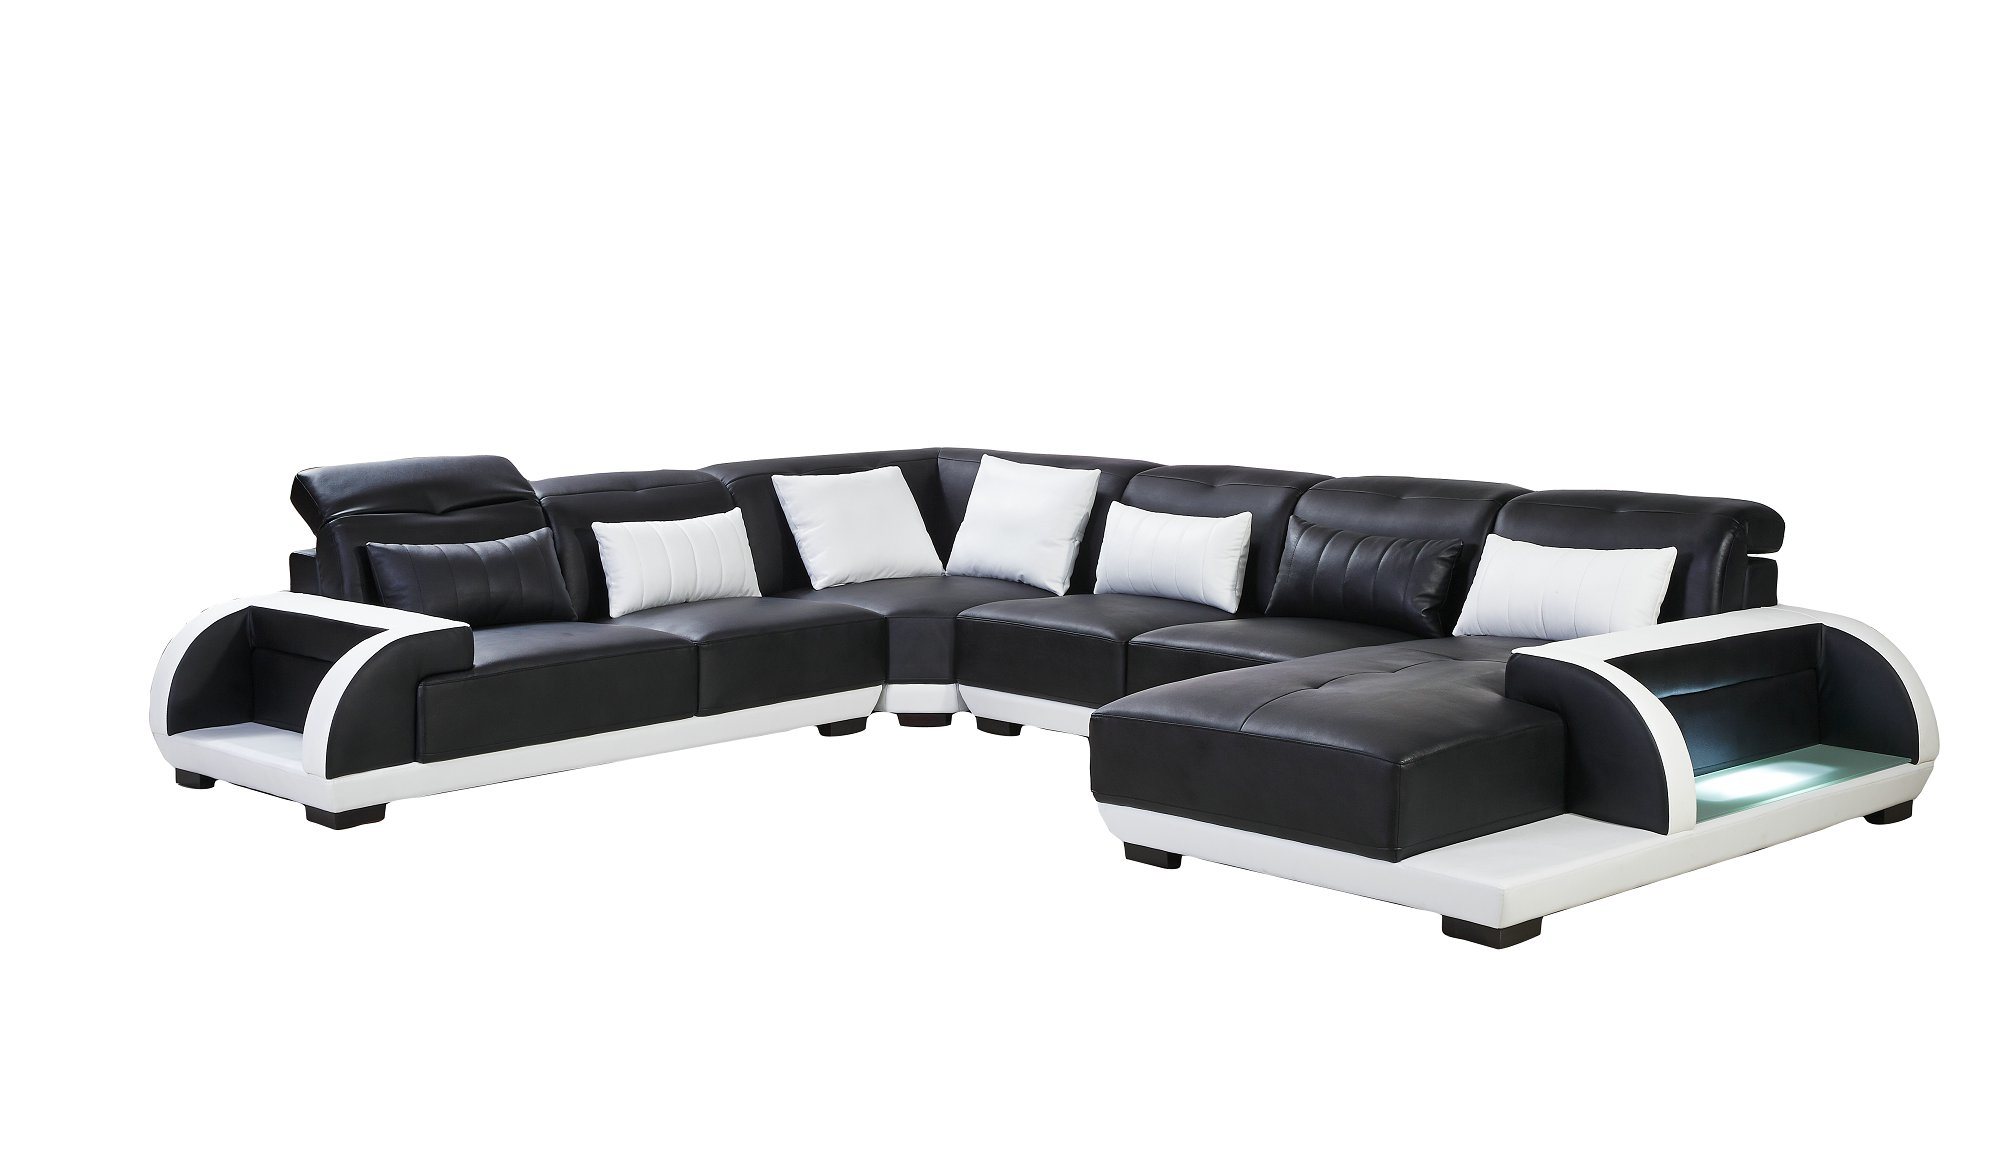 Living Room Furniture/Leisure Sectional Sofa Set/Sofa Bed